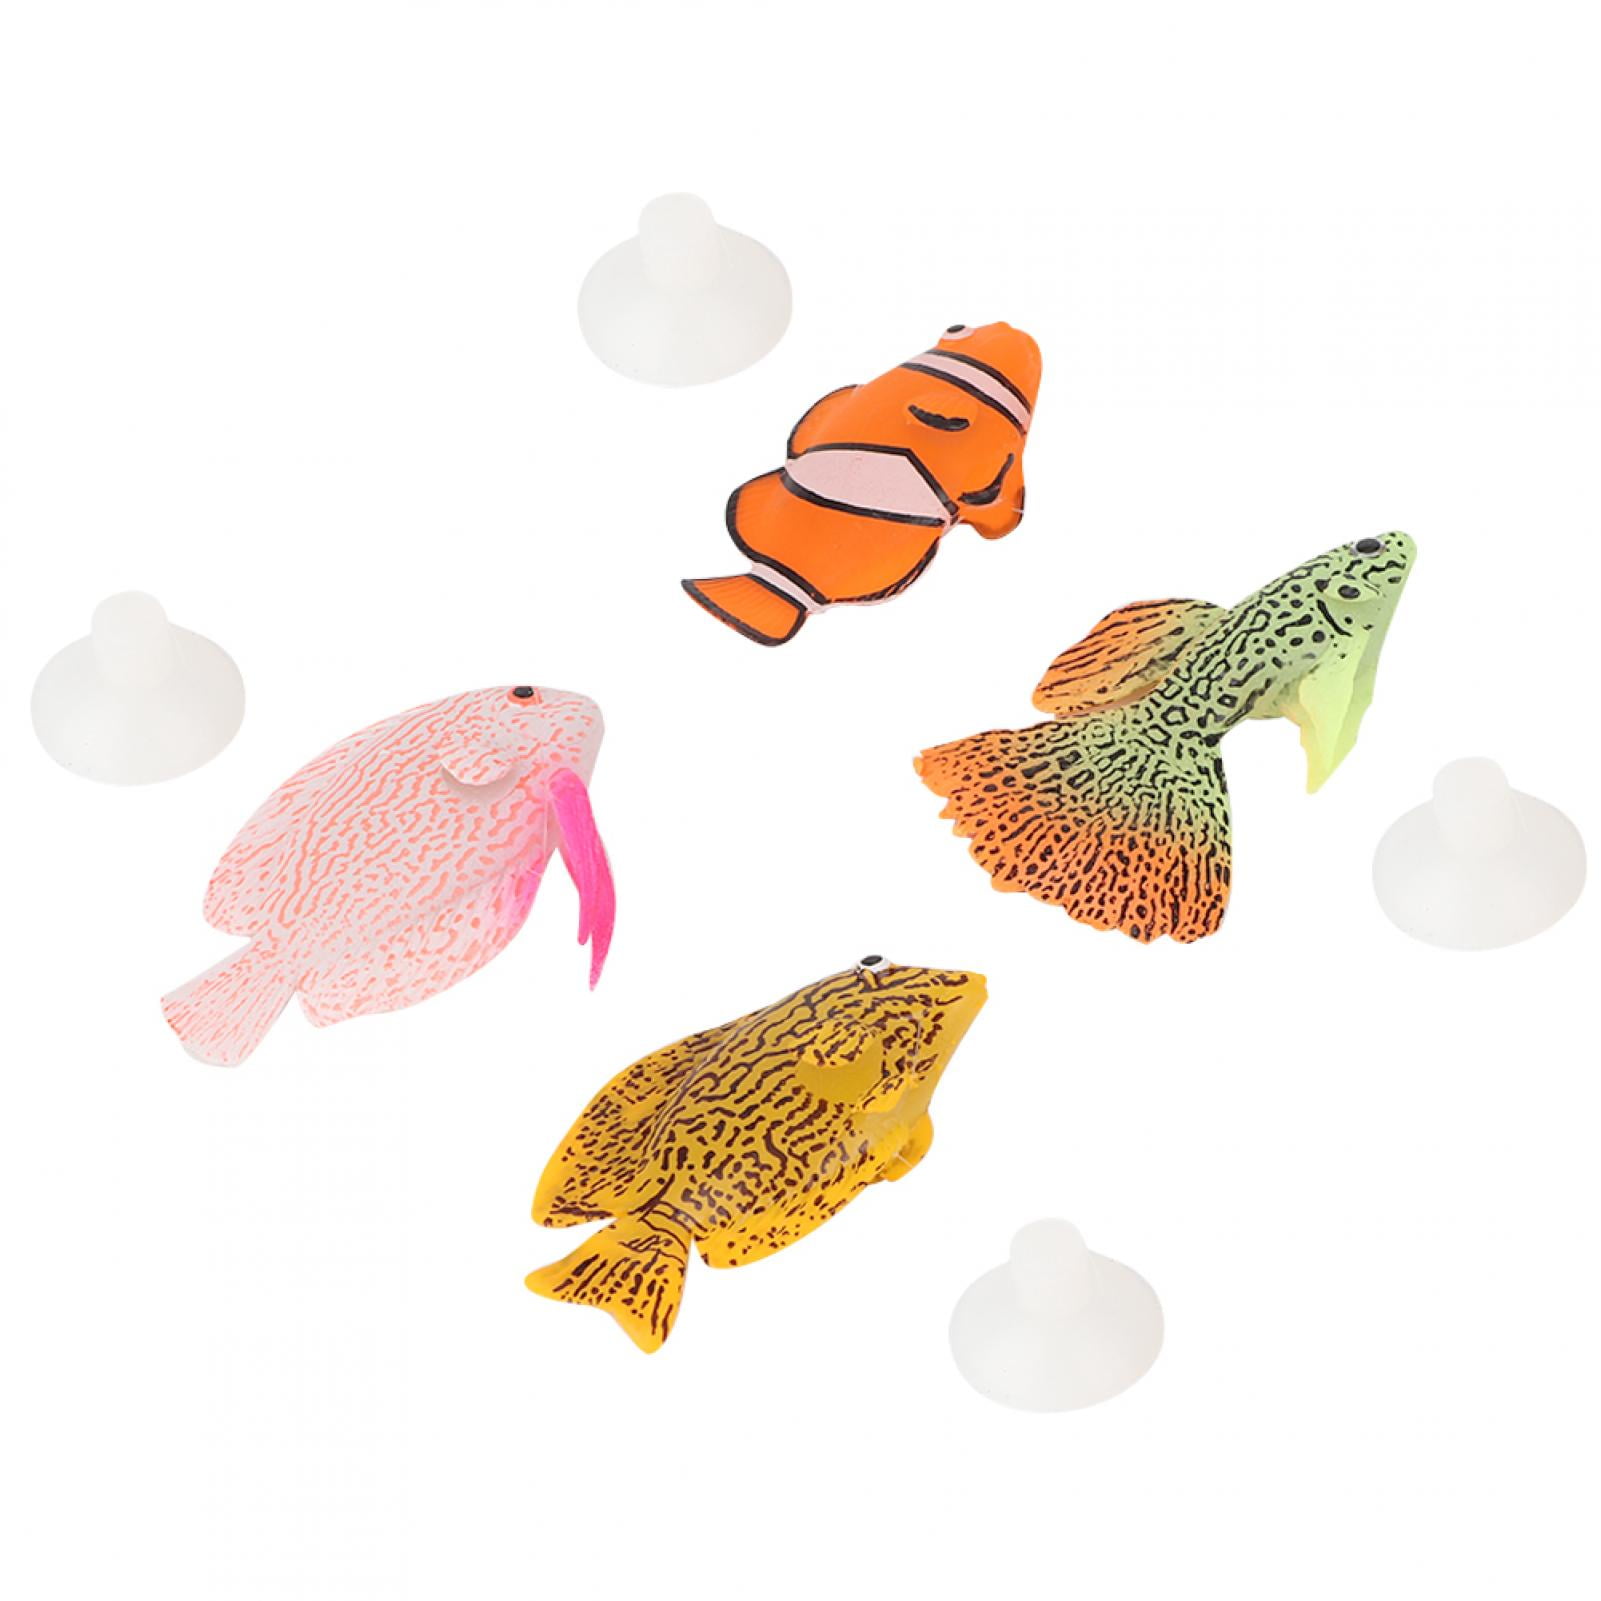 DERCLIVE Aquarium Artificial Fish Silicone Fake Fish Landscape Decoration Ac 4PCS